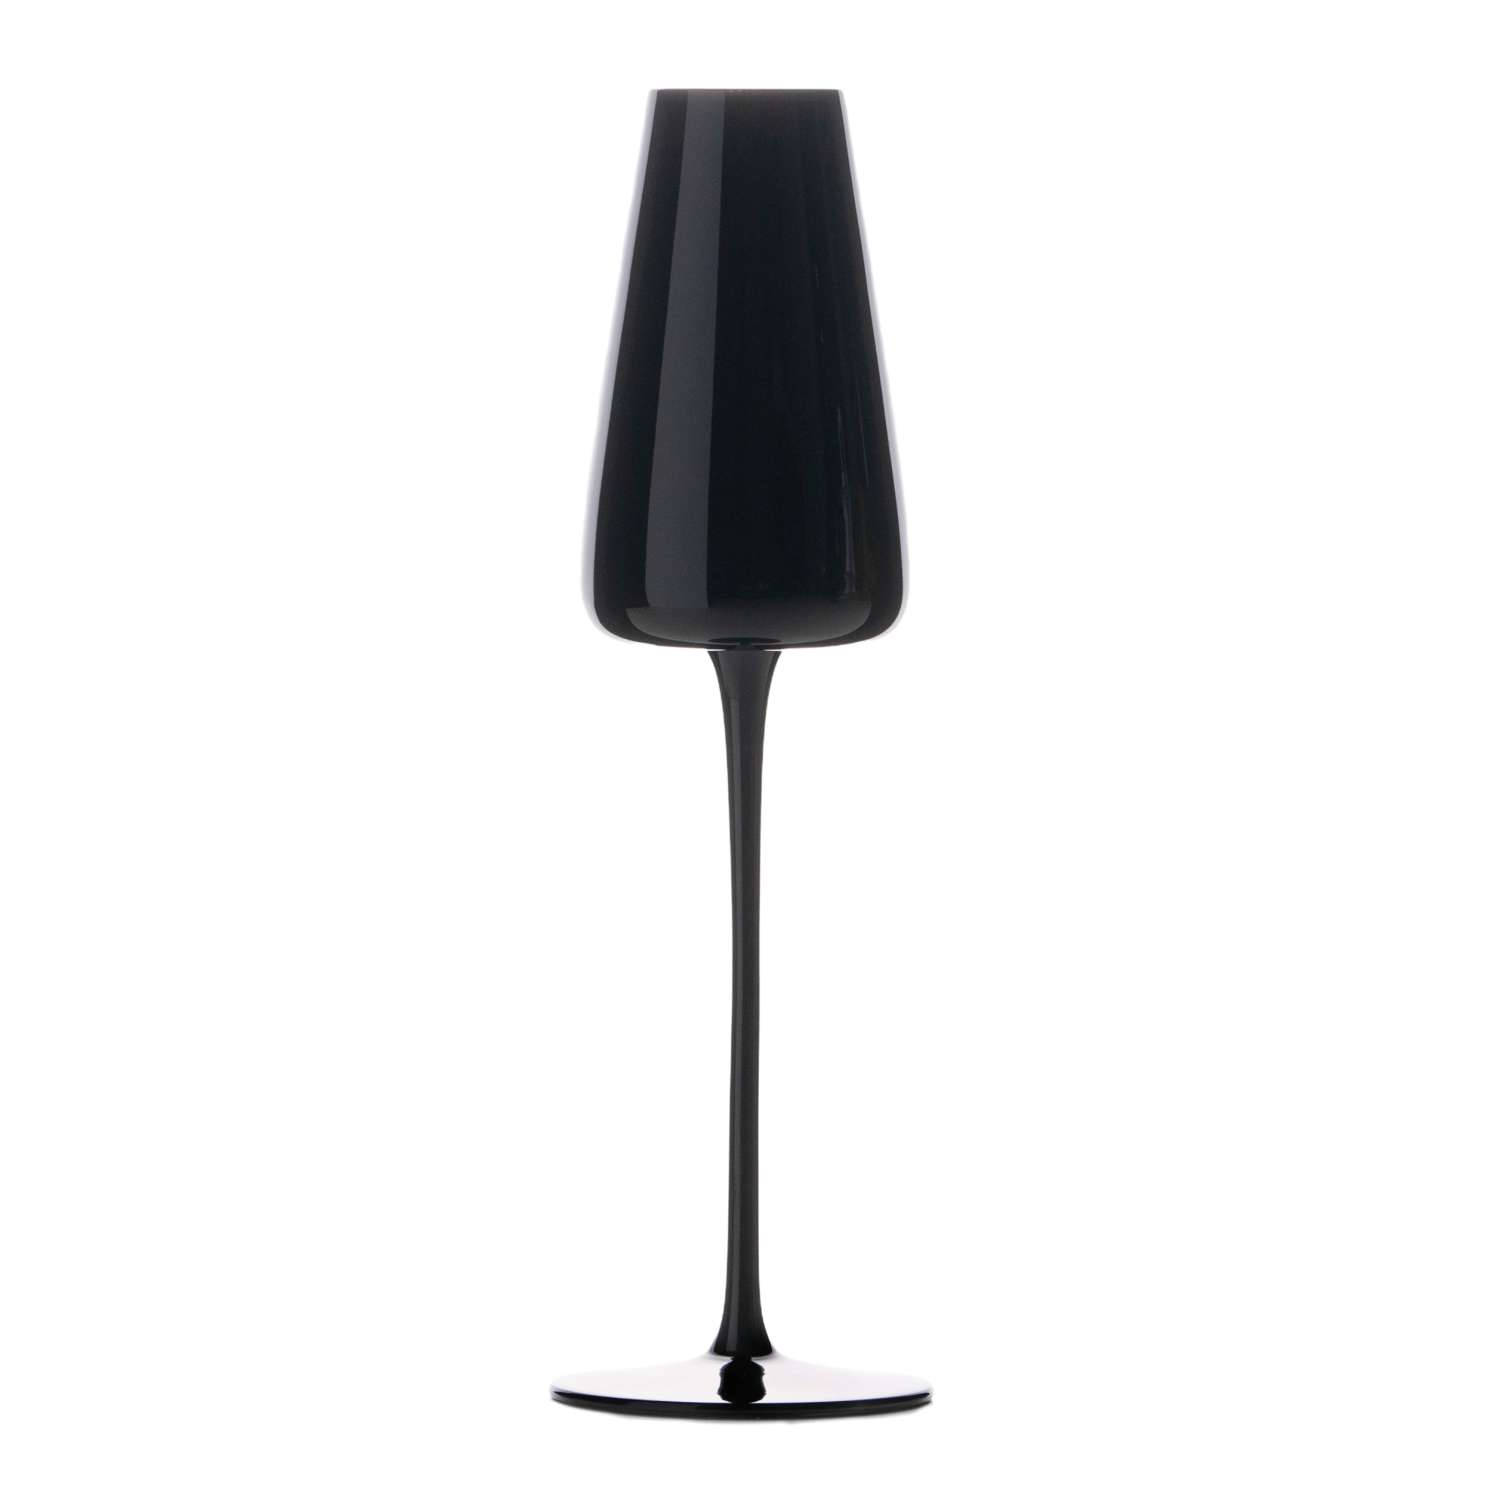 Intirilife 2x Champagneglas met modern design in Zwart - 220 ml inhoud - Glas voor mousserende wijn, Prosecco, vaatwasmachinebestendig, kristalglas, schokbestendig